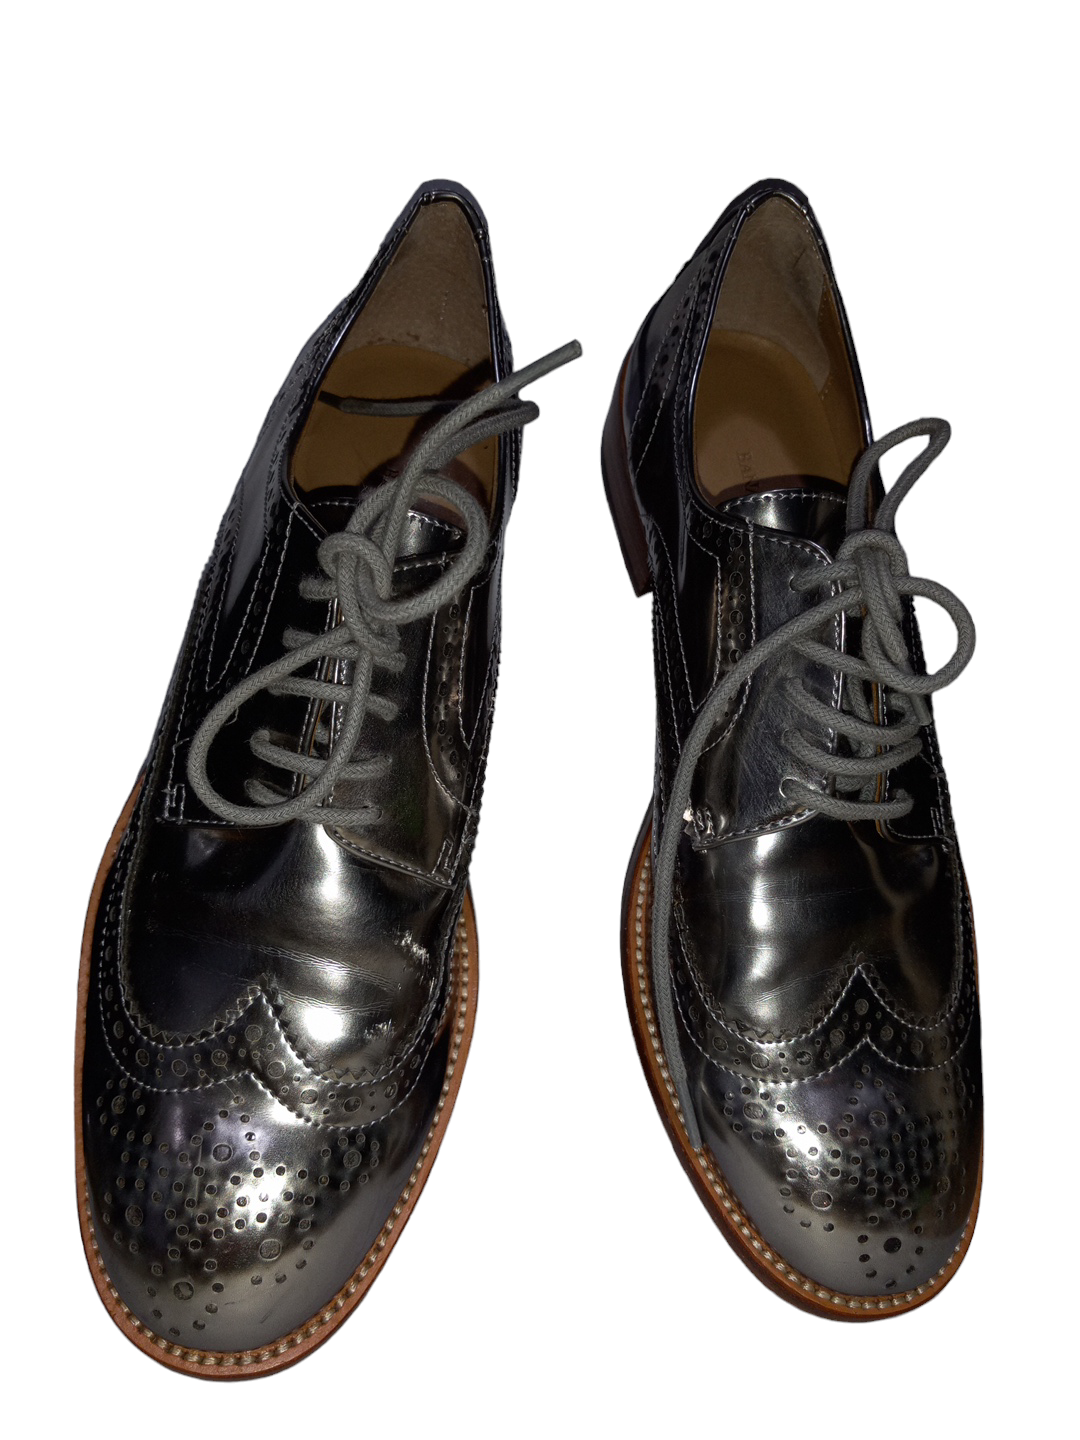 Silver Shoes Flats Banana Republic, Size 6